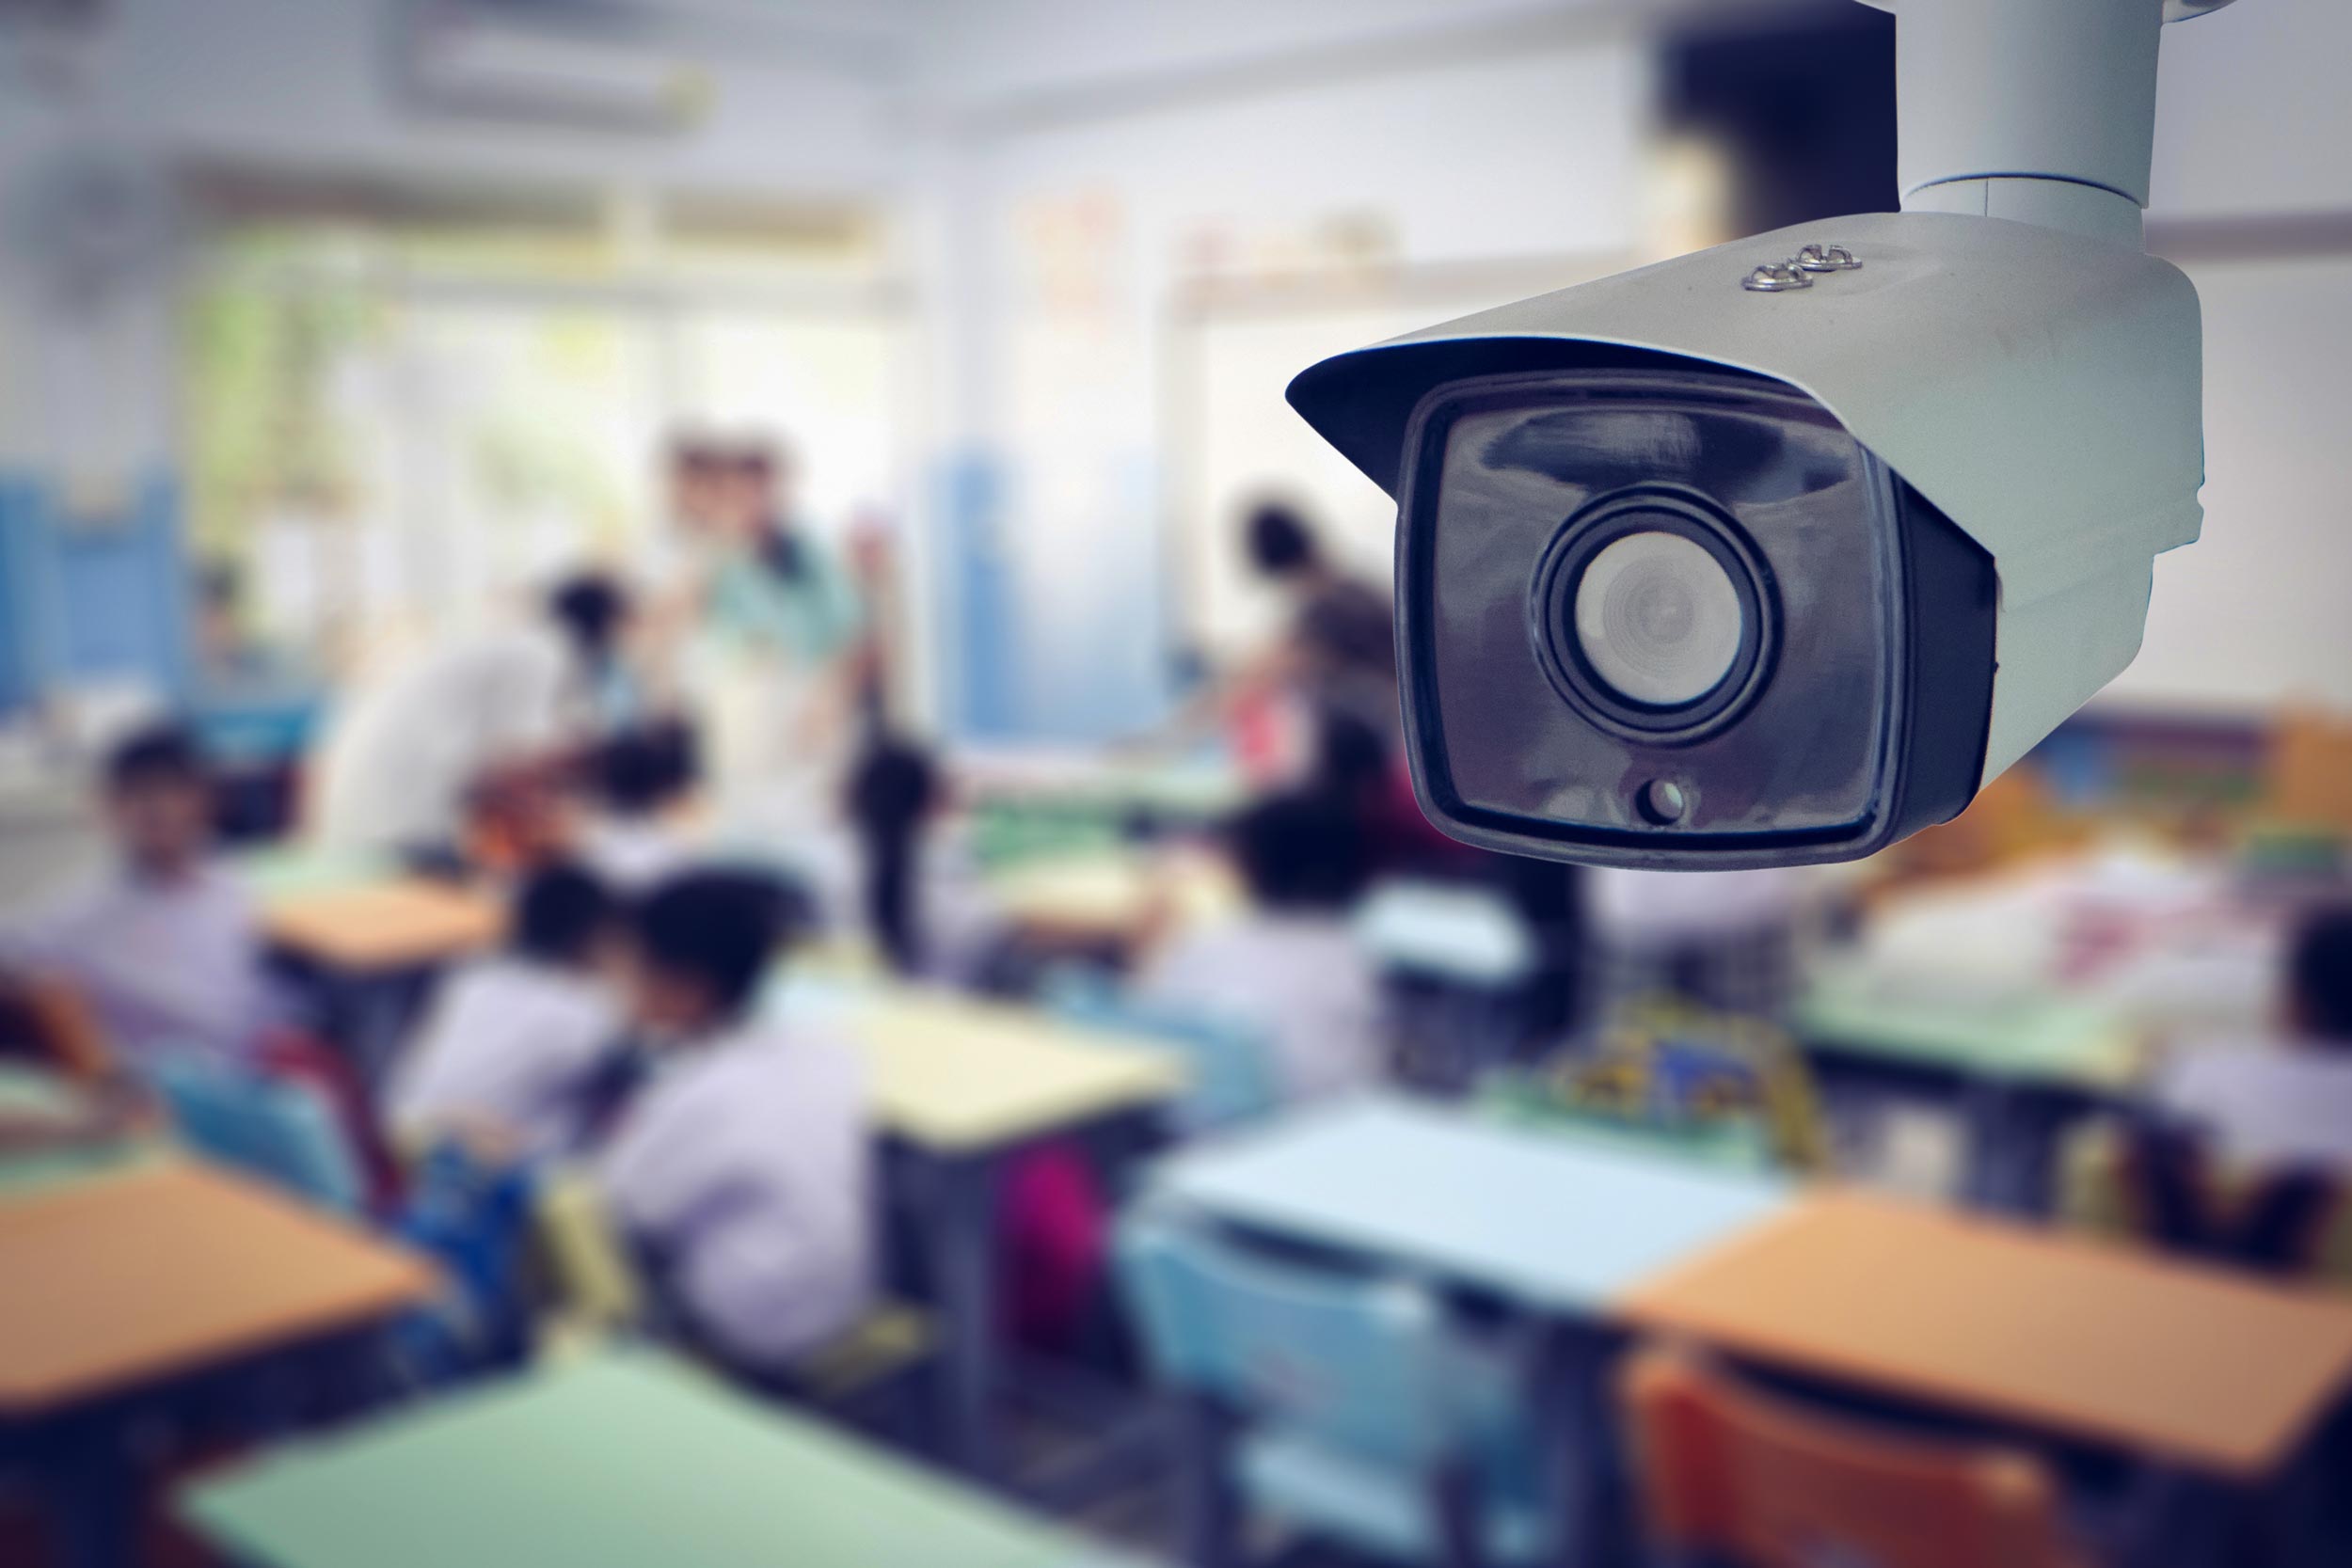 Security camera in a school classroom